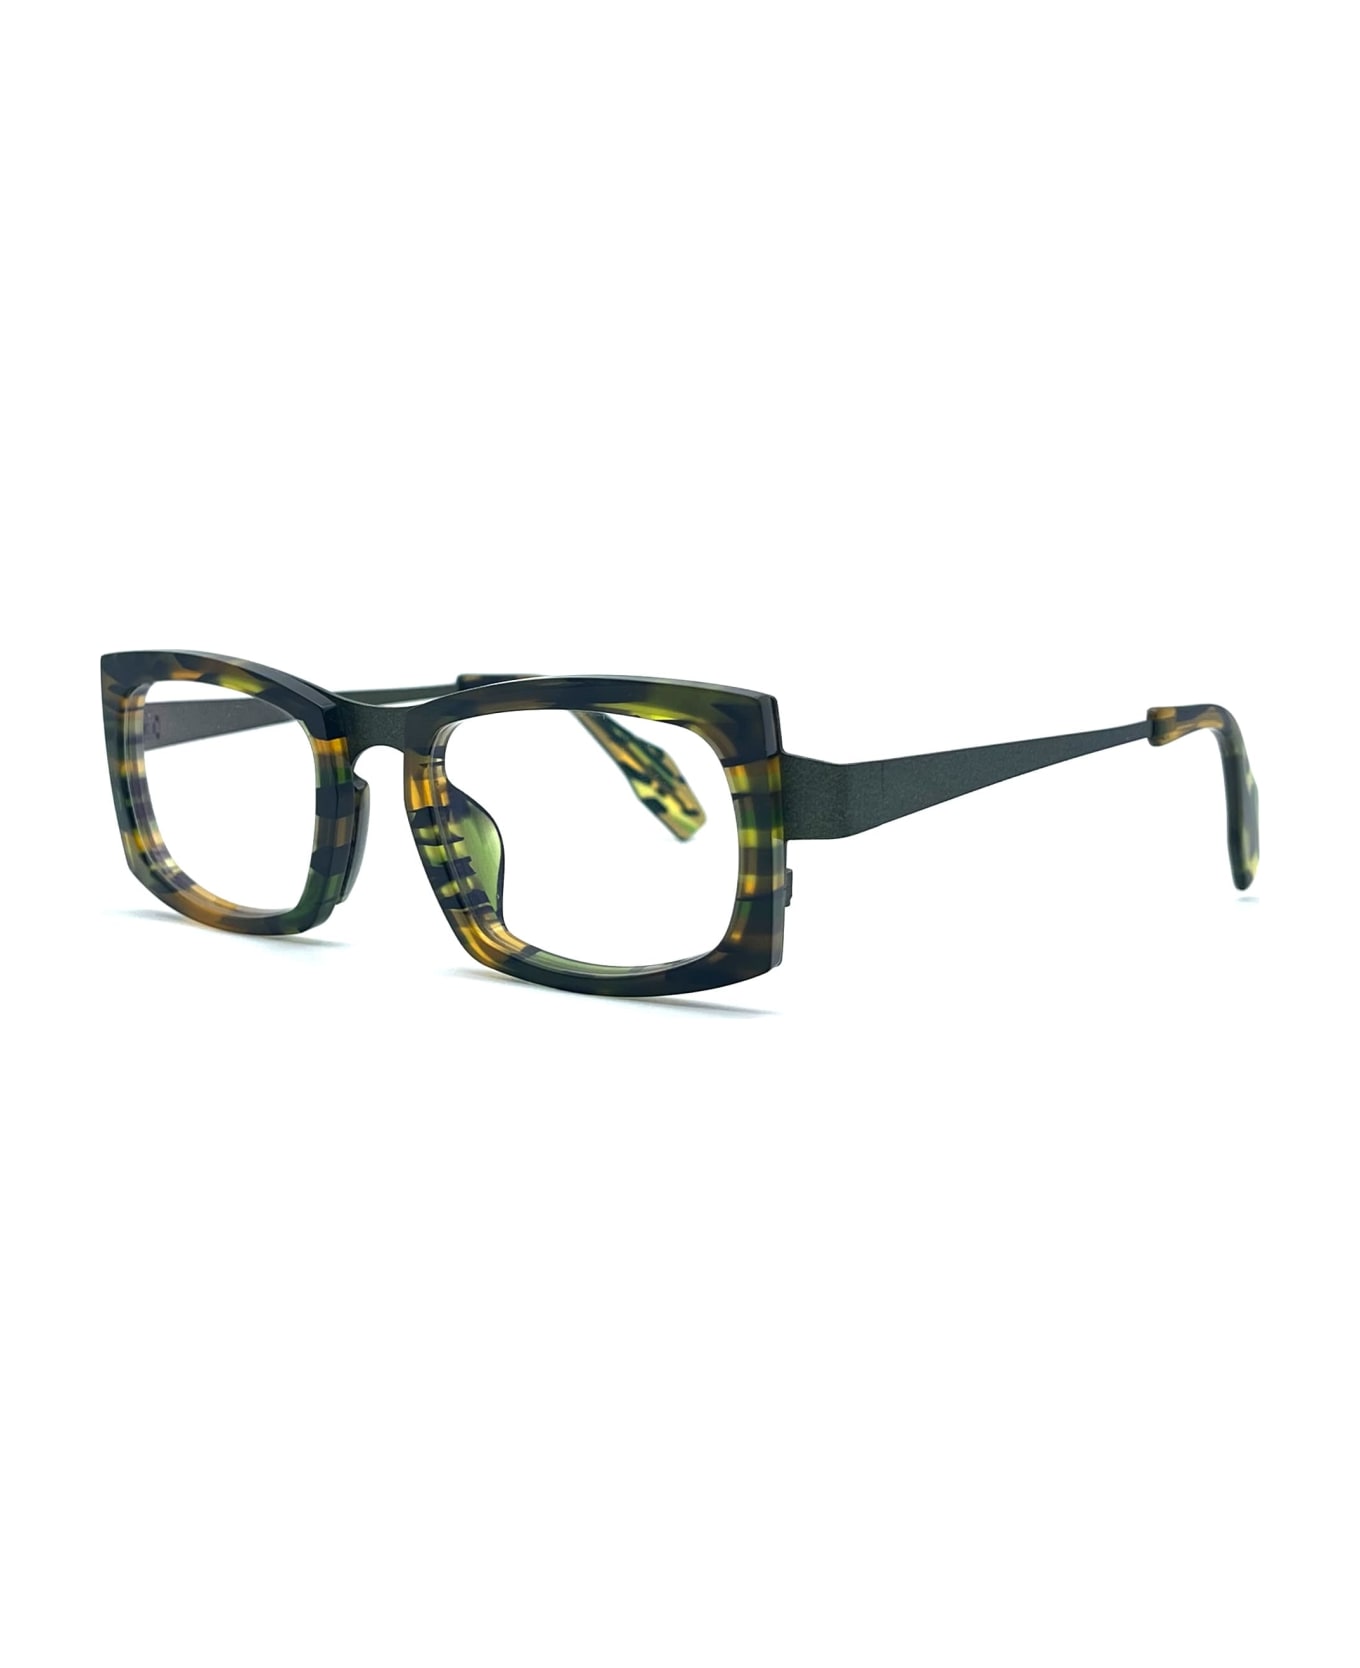 Theo Eyewear Maui - 5 Glasses - green